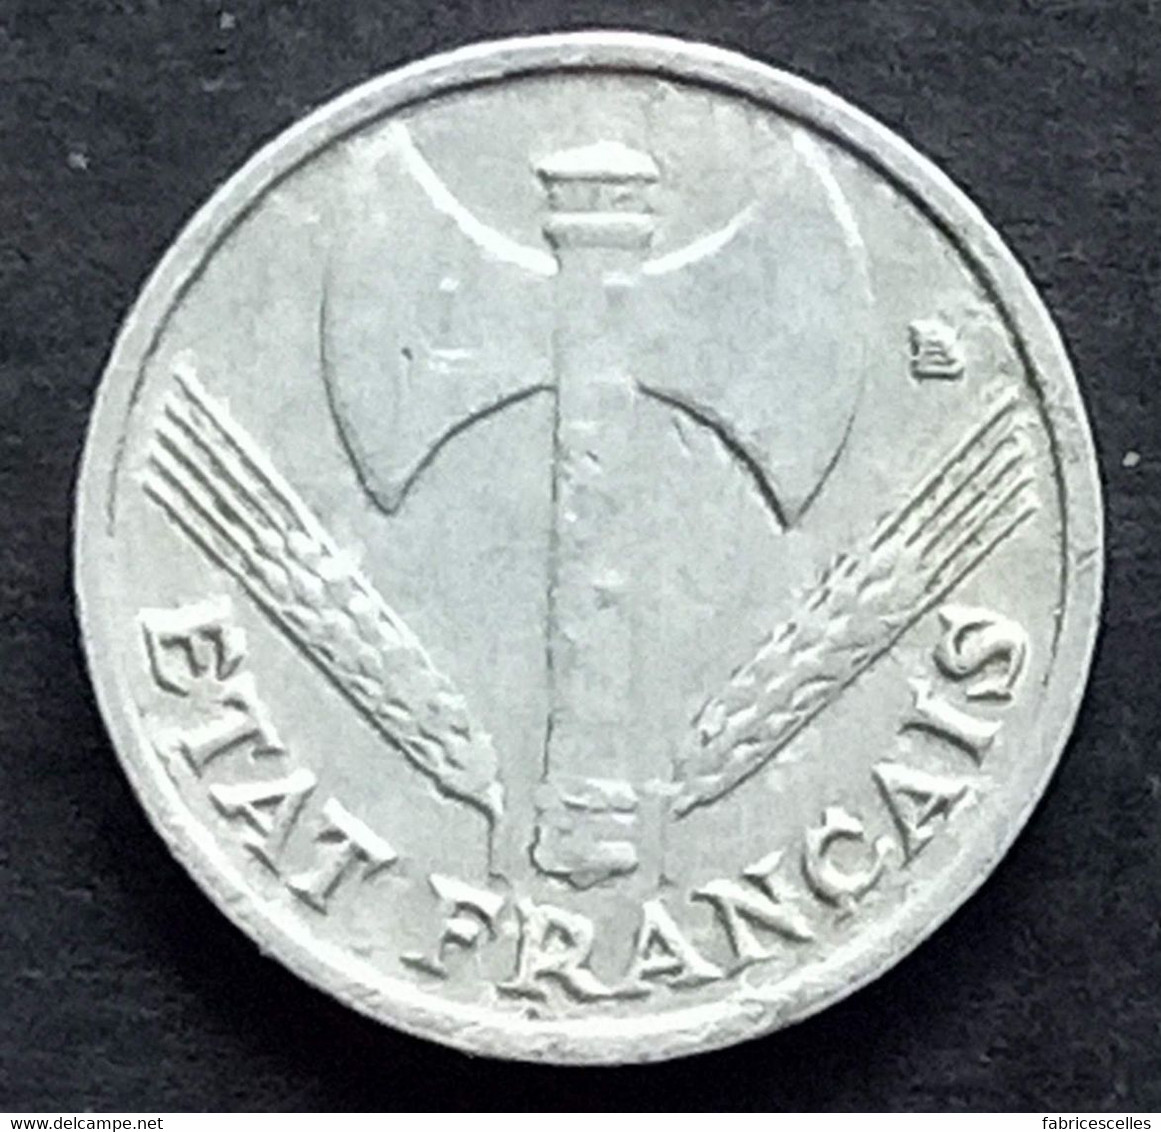 50 Centimes Bazor 1943 - 50 Centimes